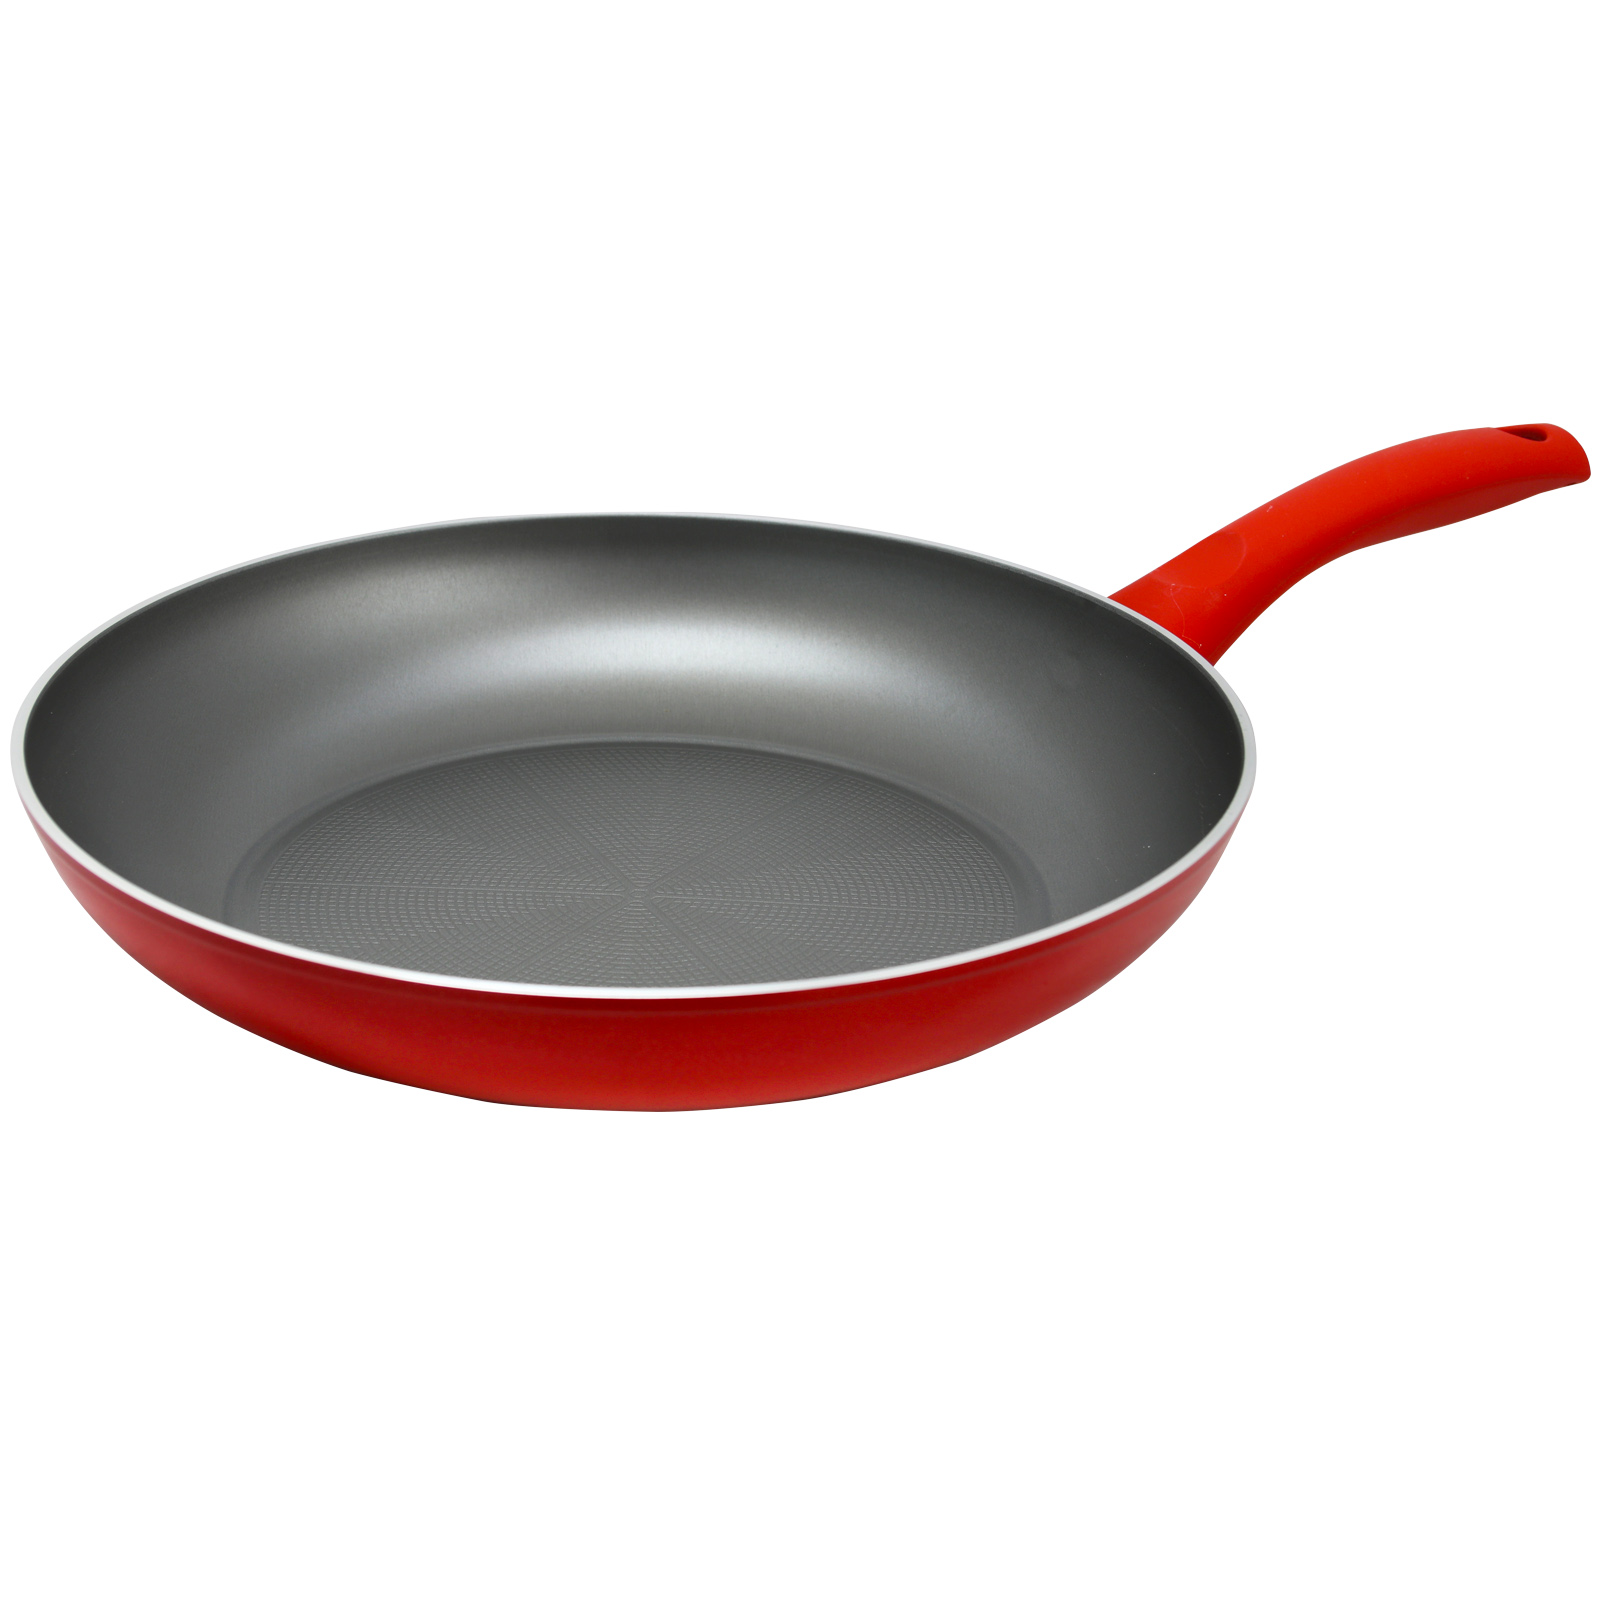 Tosca Bellocchi 12 inch Aluminum Frying Pan in Red